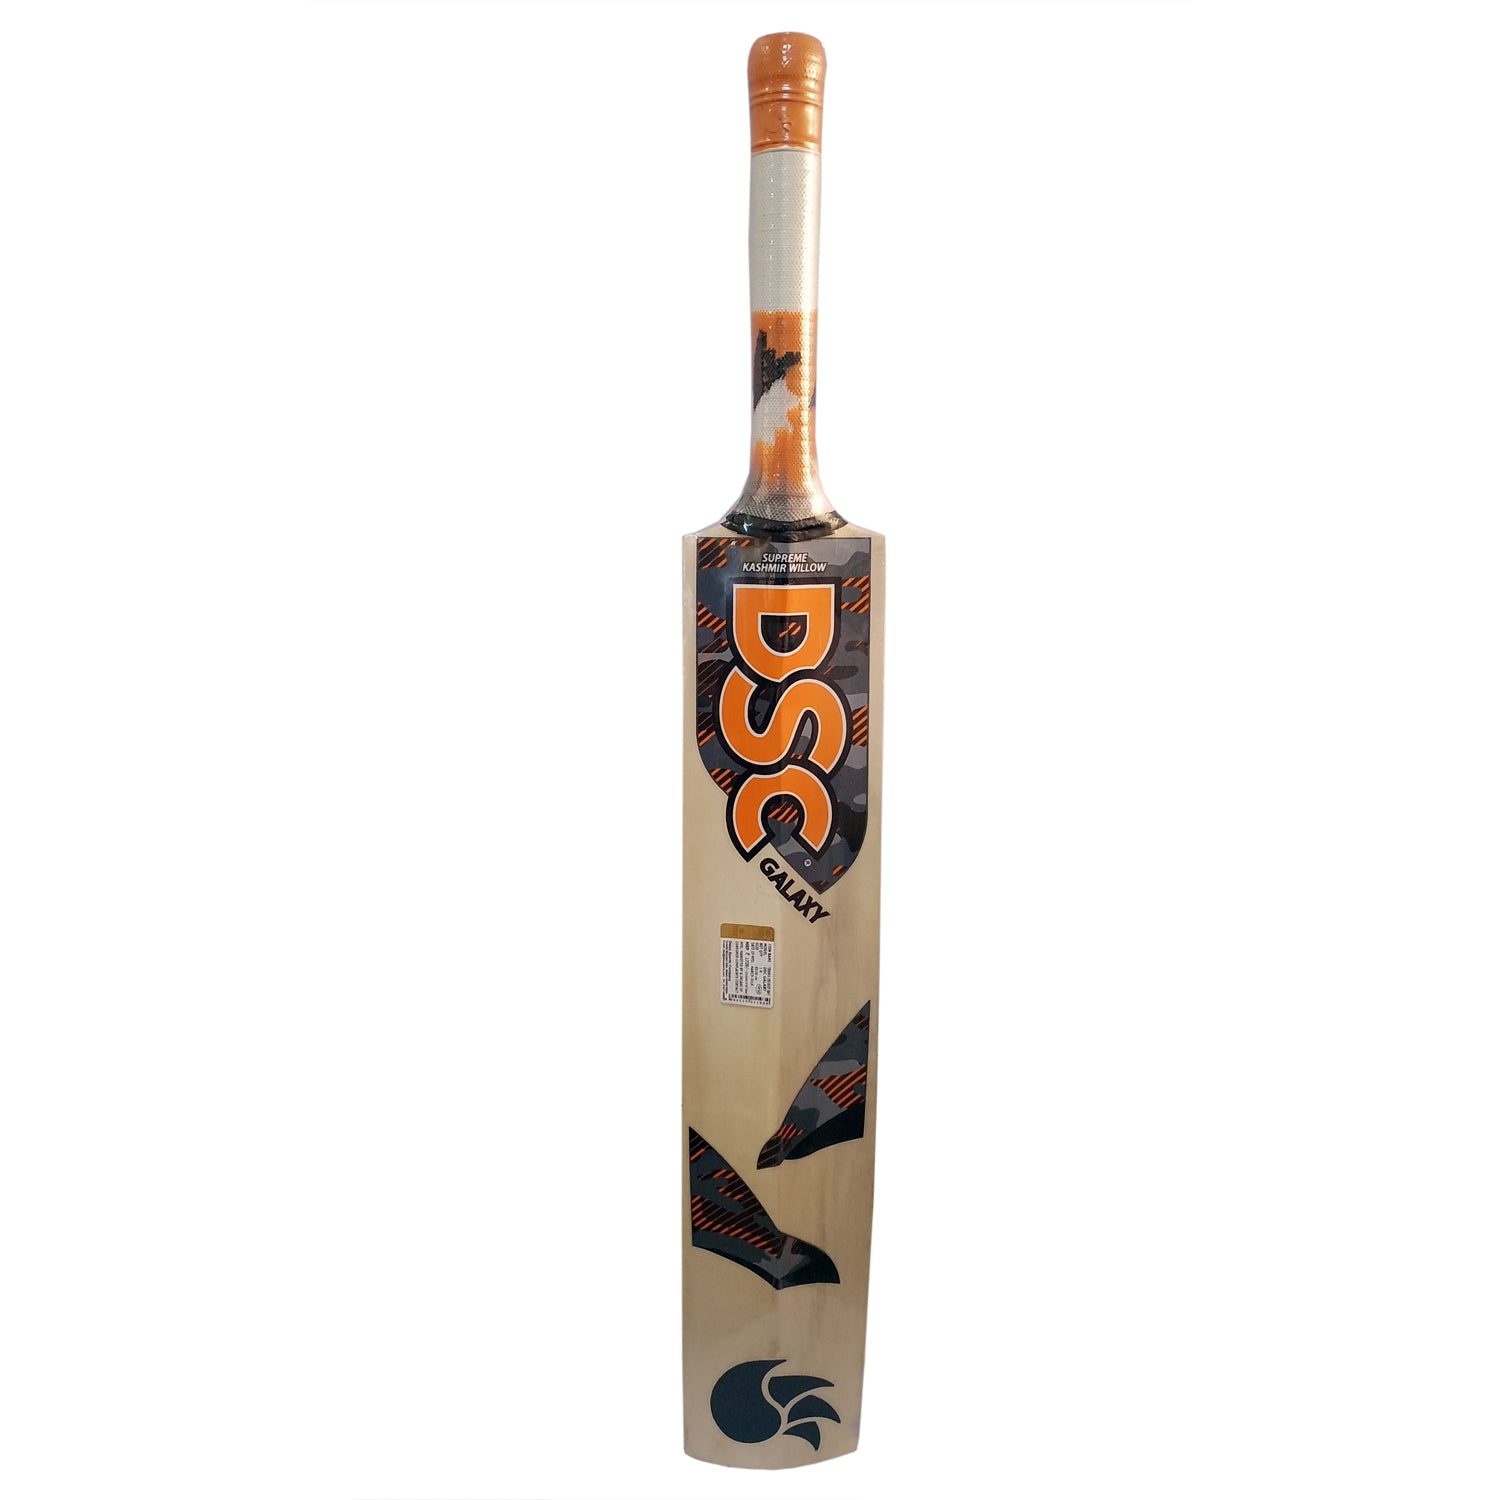 DSC Galaxy Kashmir Willow Cricket Bat - Best Price online Prokicksports.com